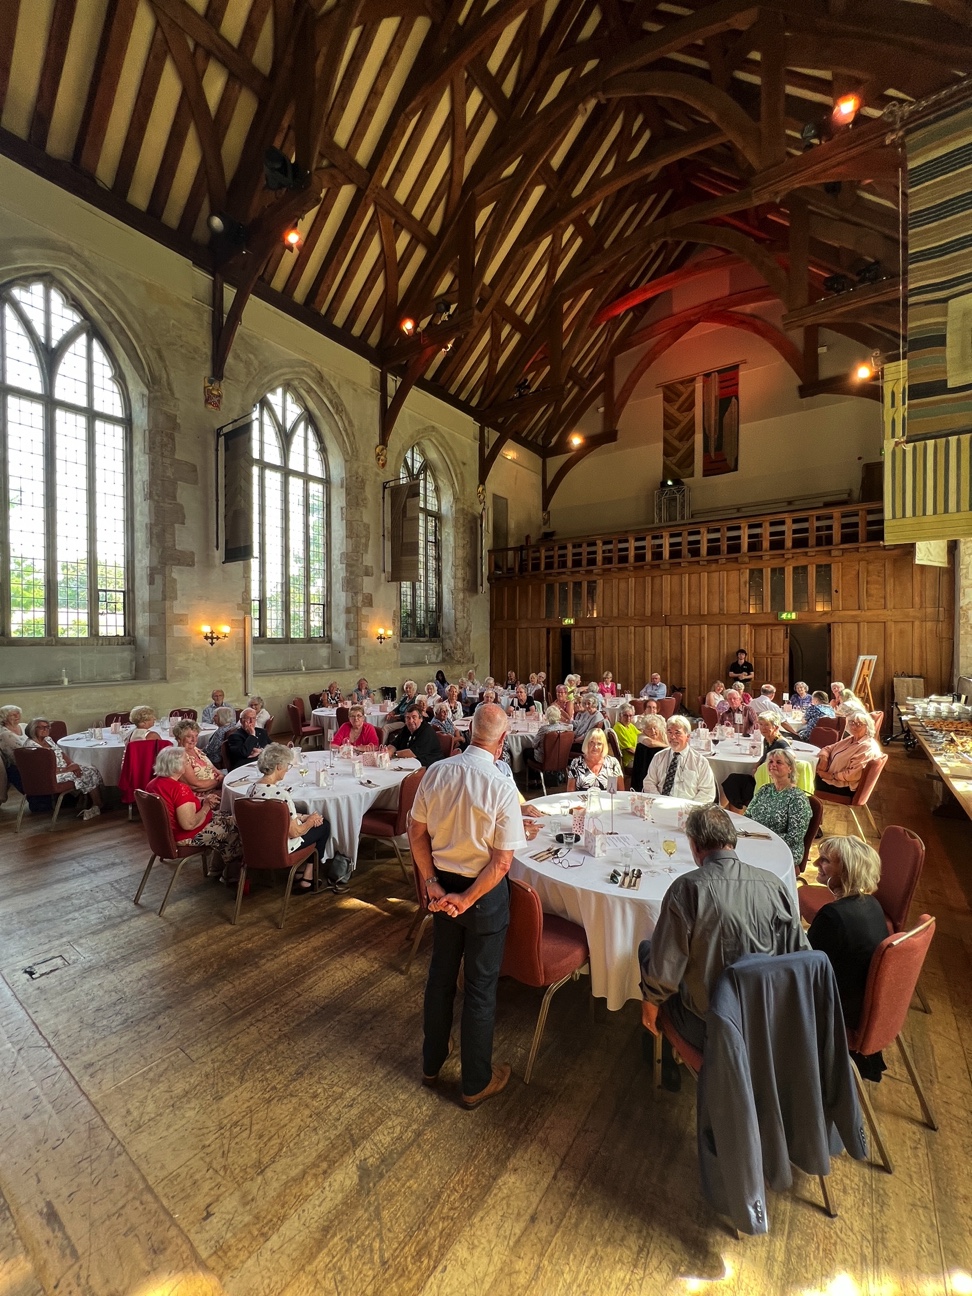 Devon Masonic Widows Luncheon at the Great Hall of Darlington